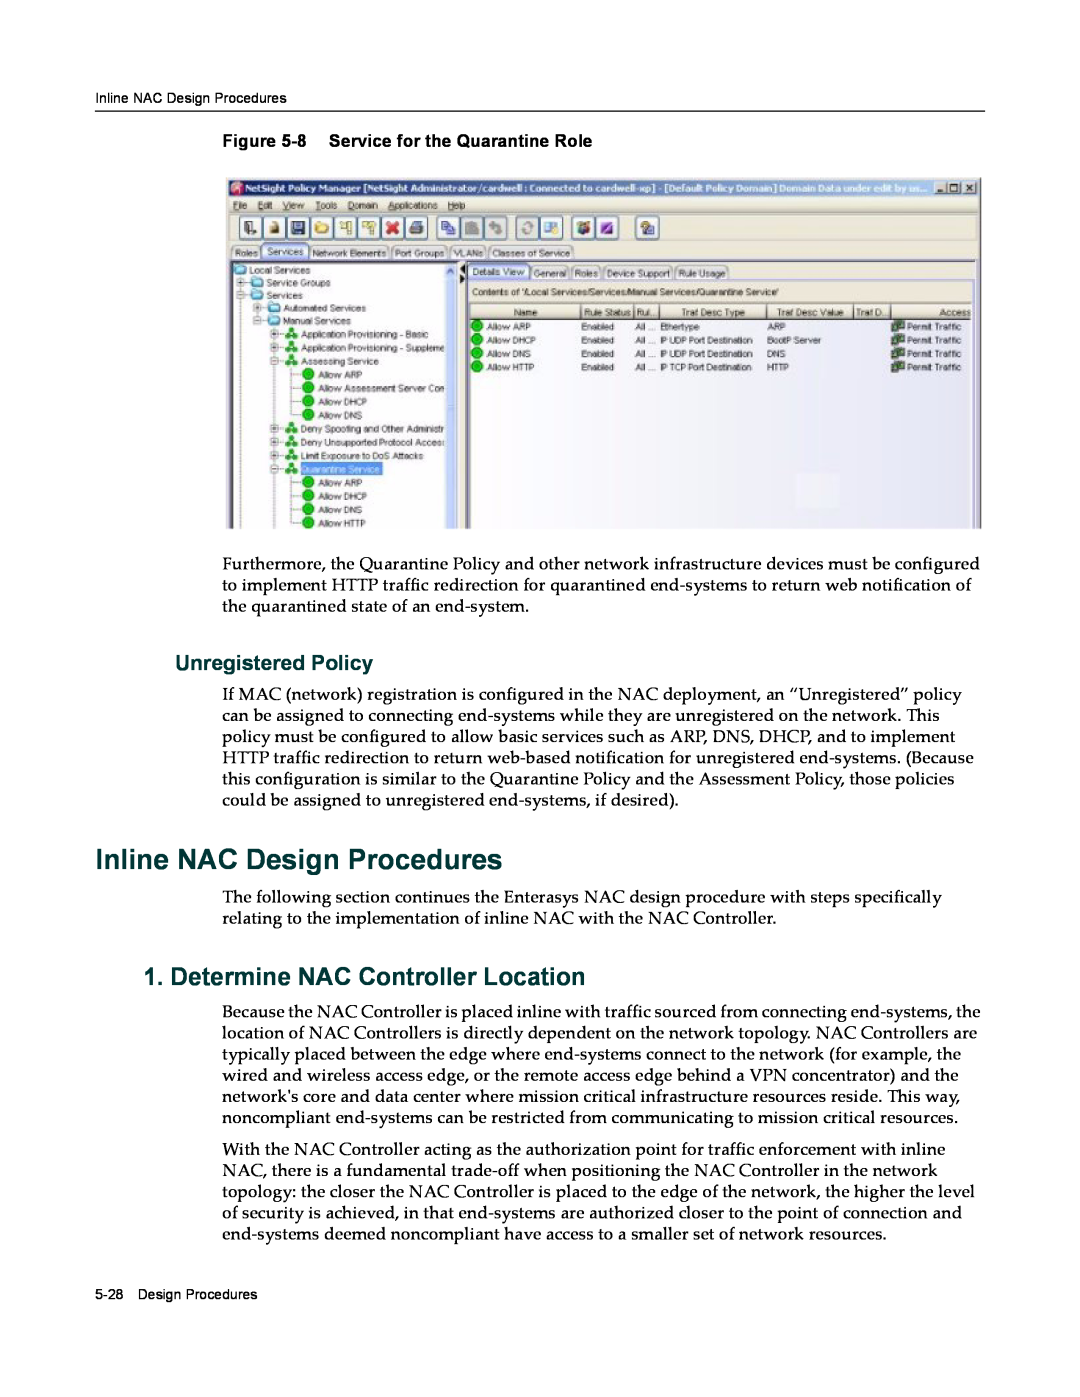 Enterasys Networks 9034385 manual Inline NAC Design Procedures, Determine NAC Controller Location, Unregistered Policy 